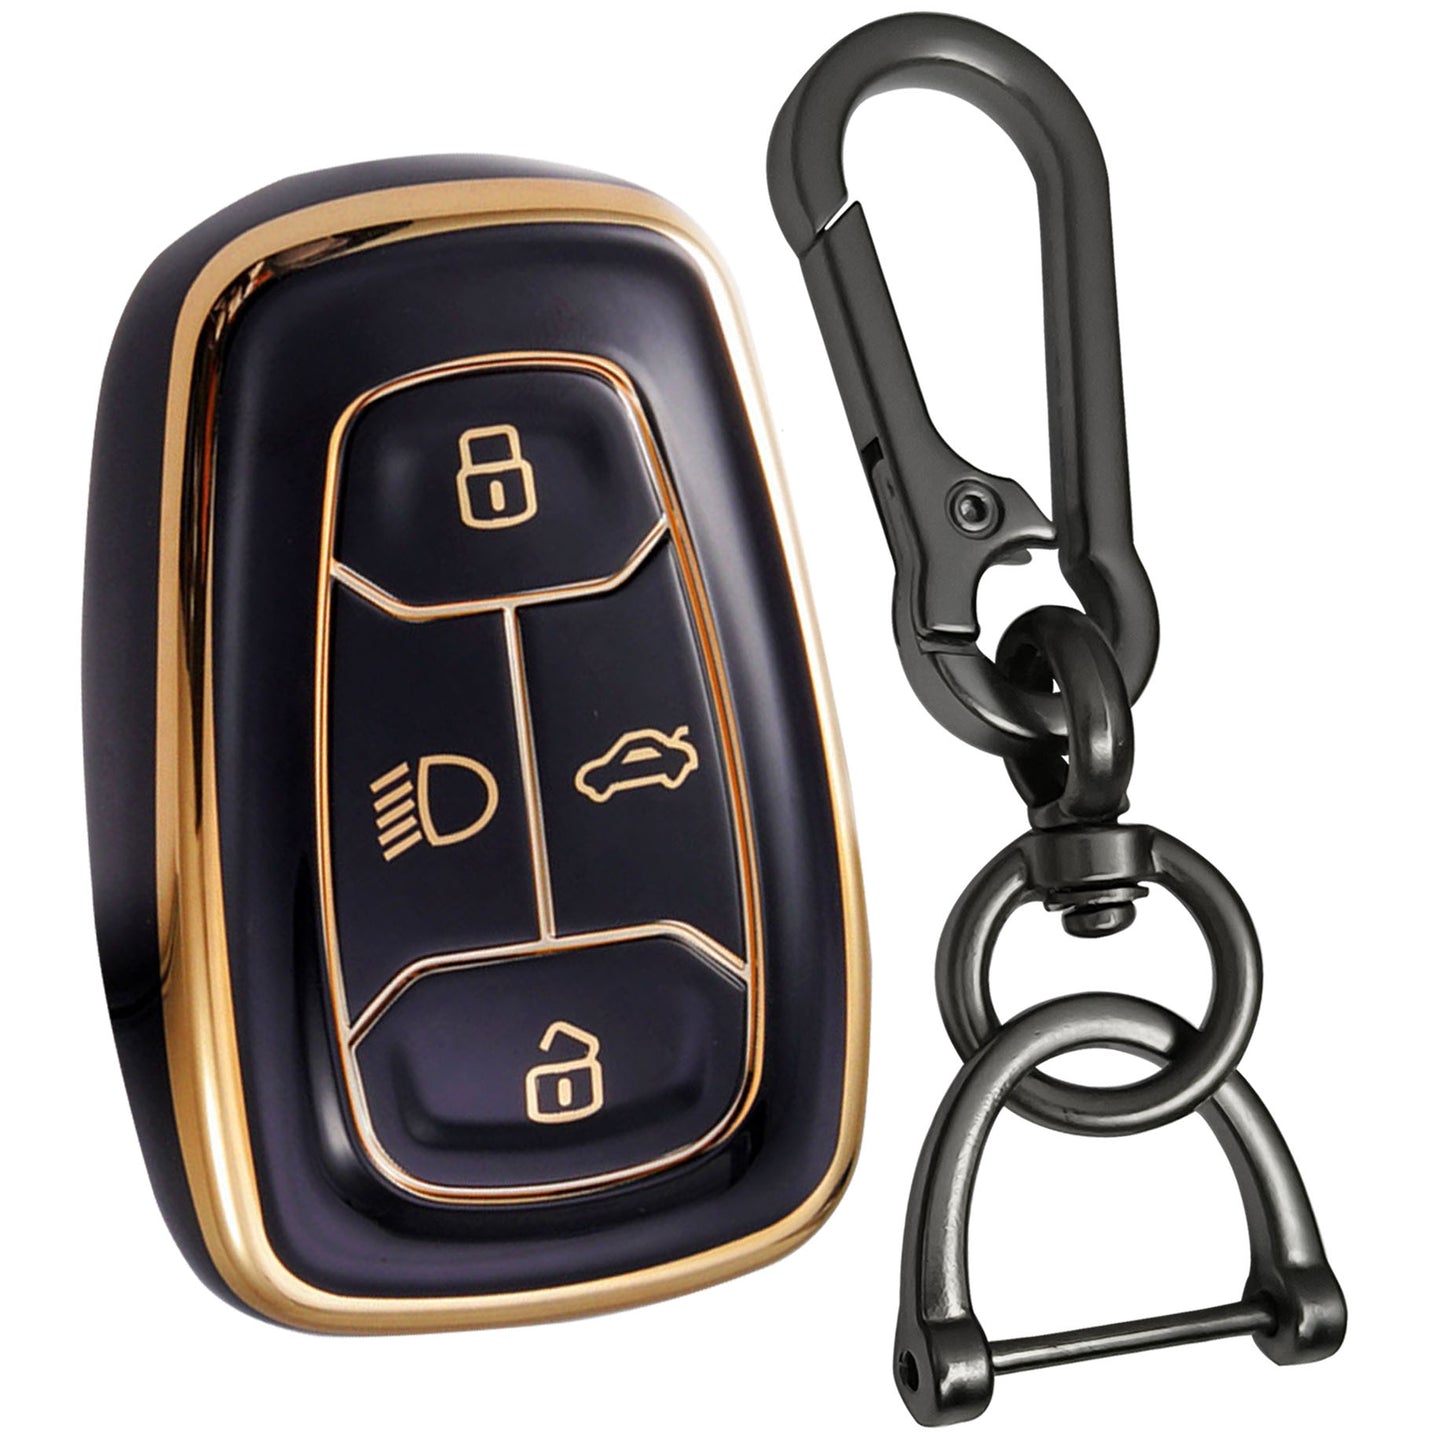 tata nexon harrier safari punch altroz tpu cover black gold key cover case accessories keychain